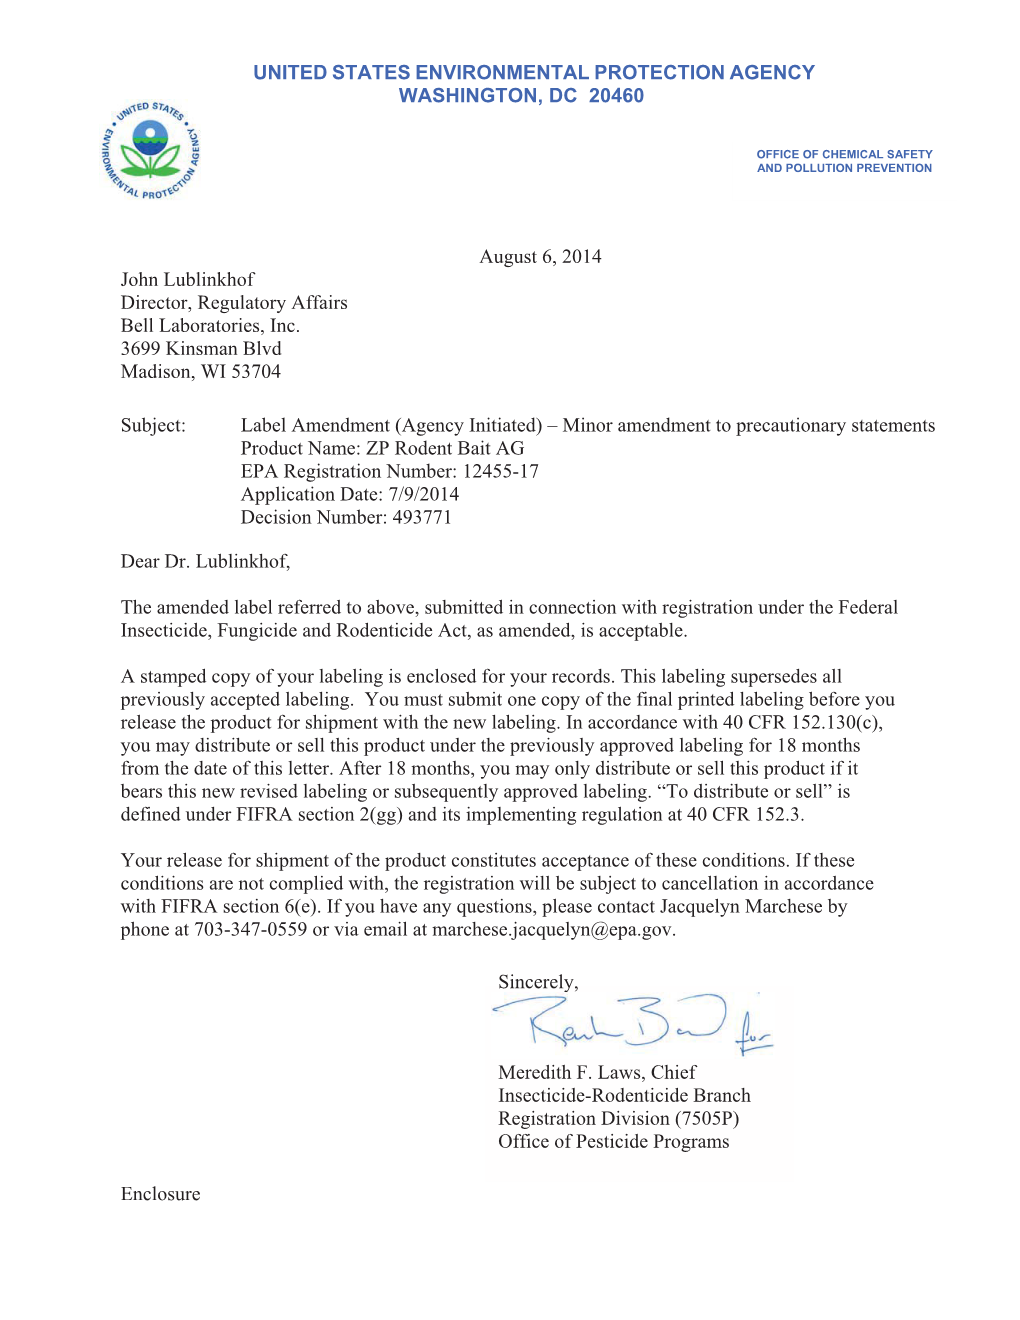 US EPA, Pesticide Product Label, ZP RODENT BAIT AG,06/08/2014